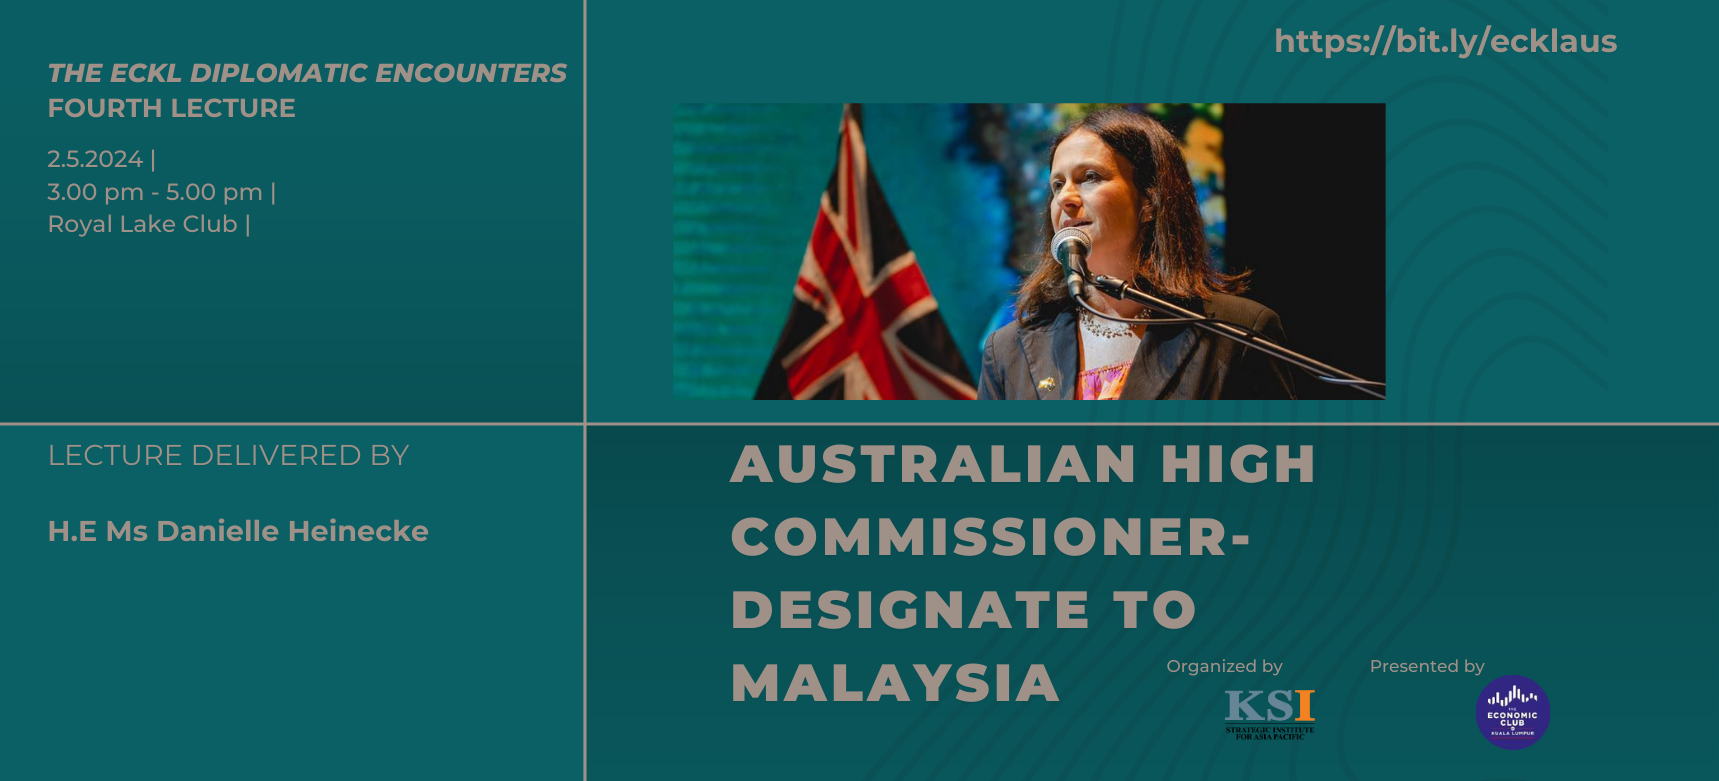 [ECKL Diplomatic Encounters] 4th Lecture Series with Australian High Commissioner-designate to Malaysia, H.E. Ms Danielle Heinecke